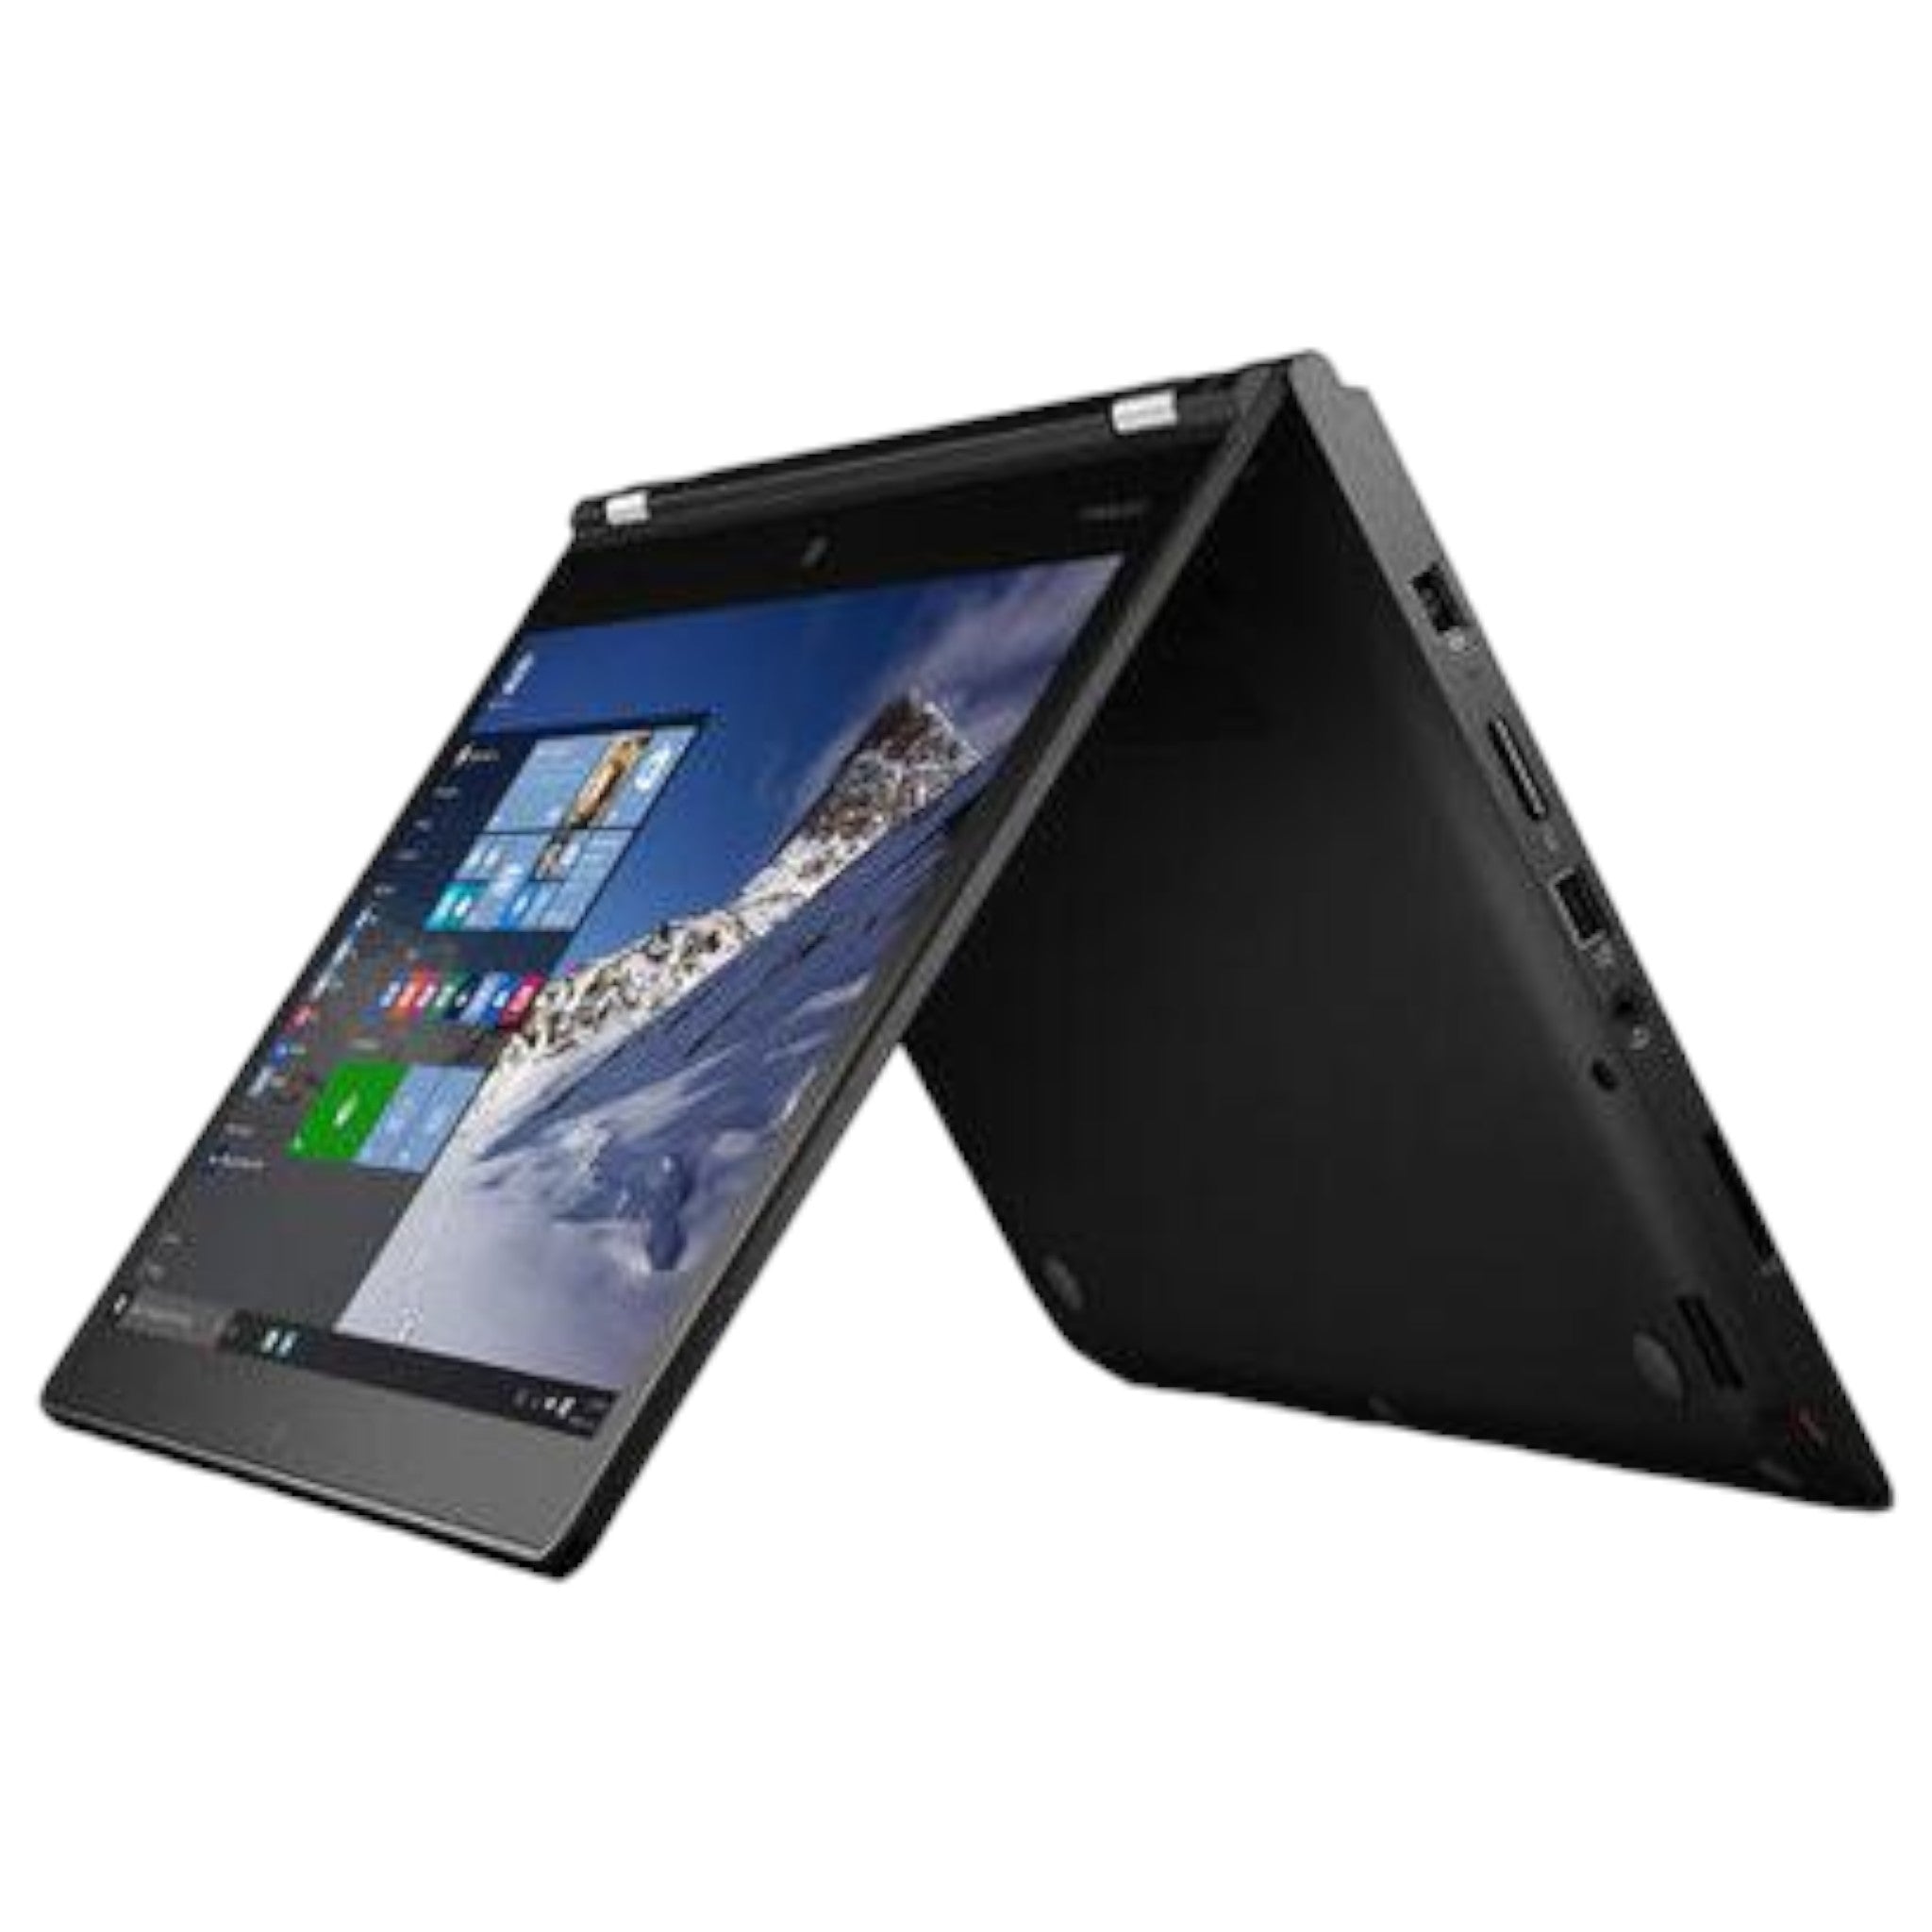 Lenovo ThinkPad Yoga 460 14" | i5-6300U | 8 GB | 256 GB SSD | FHD | 4G | Win 10 Pro - computify